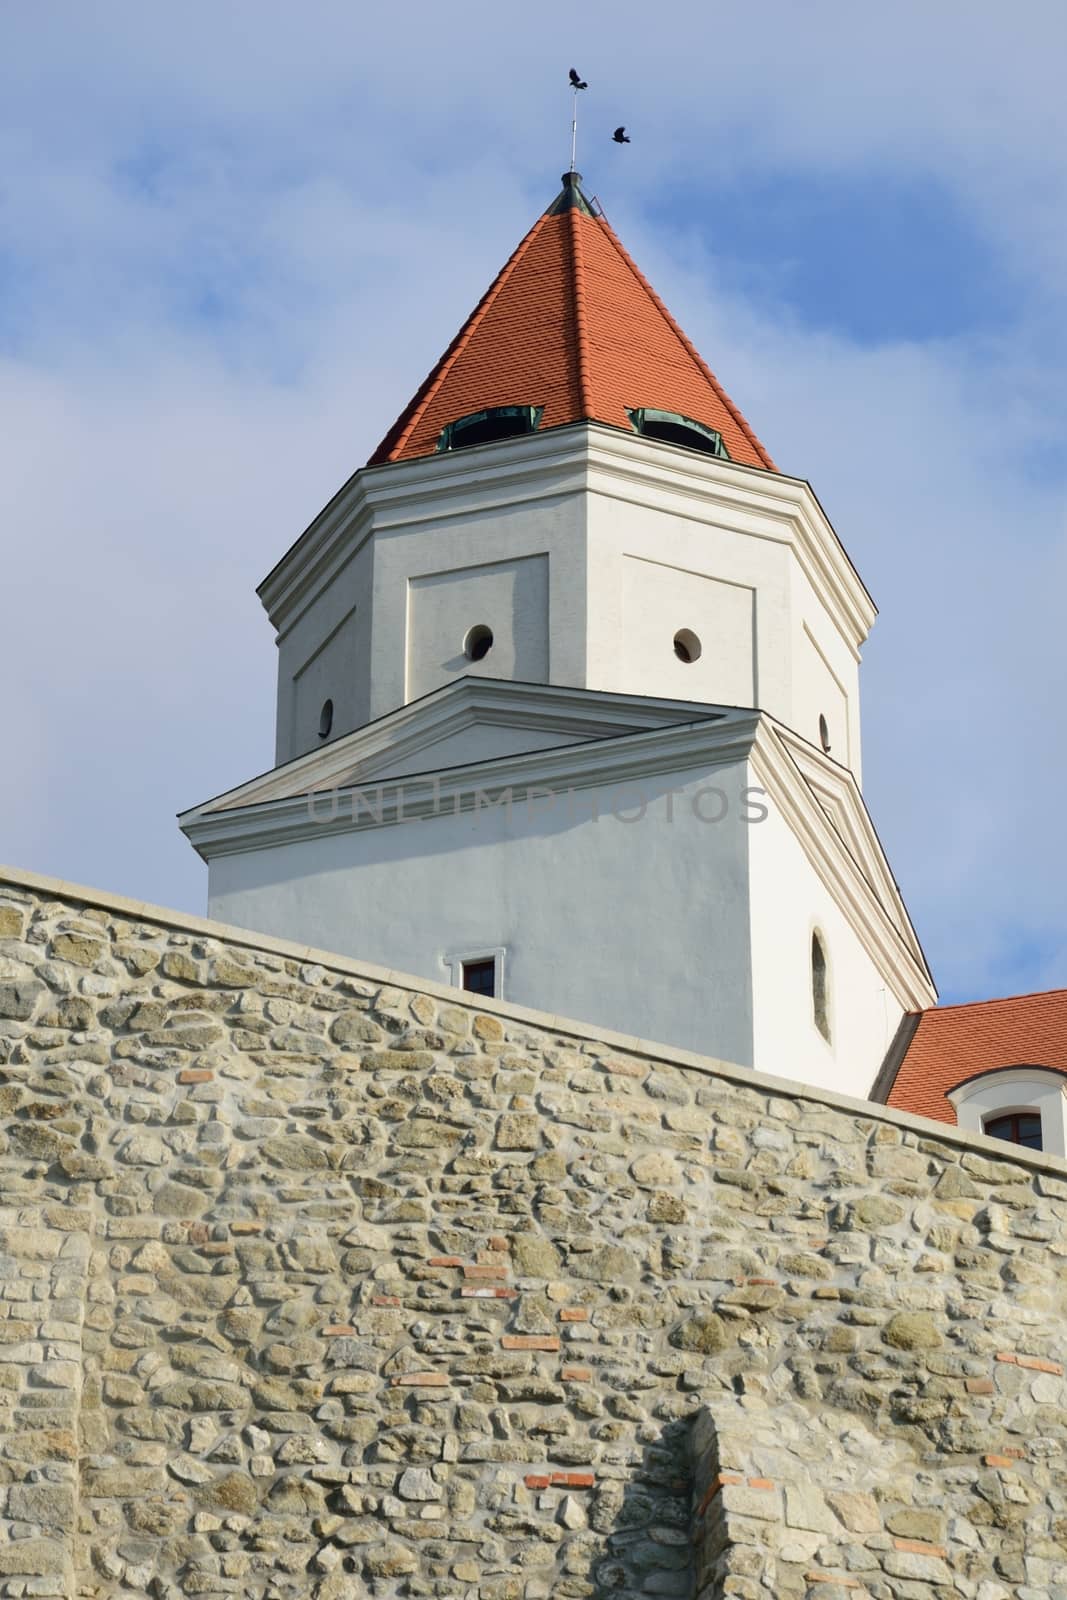 Tower of Bratislva Castle  by pauws99